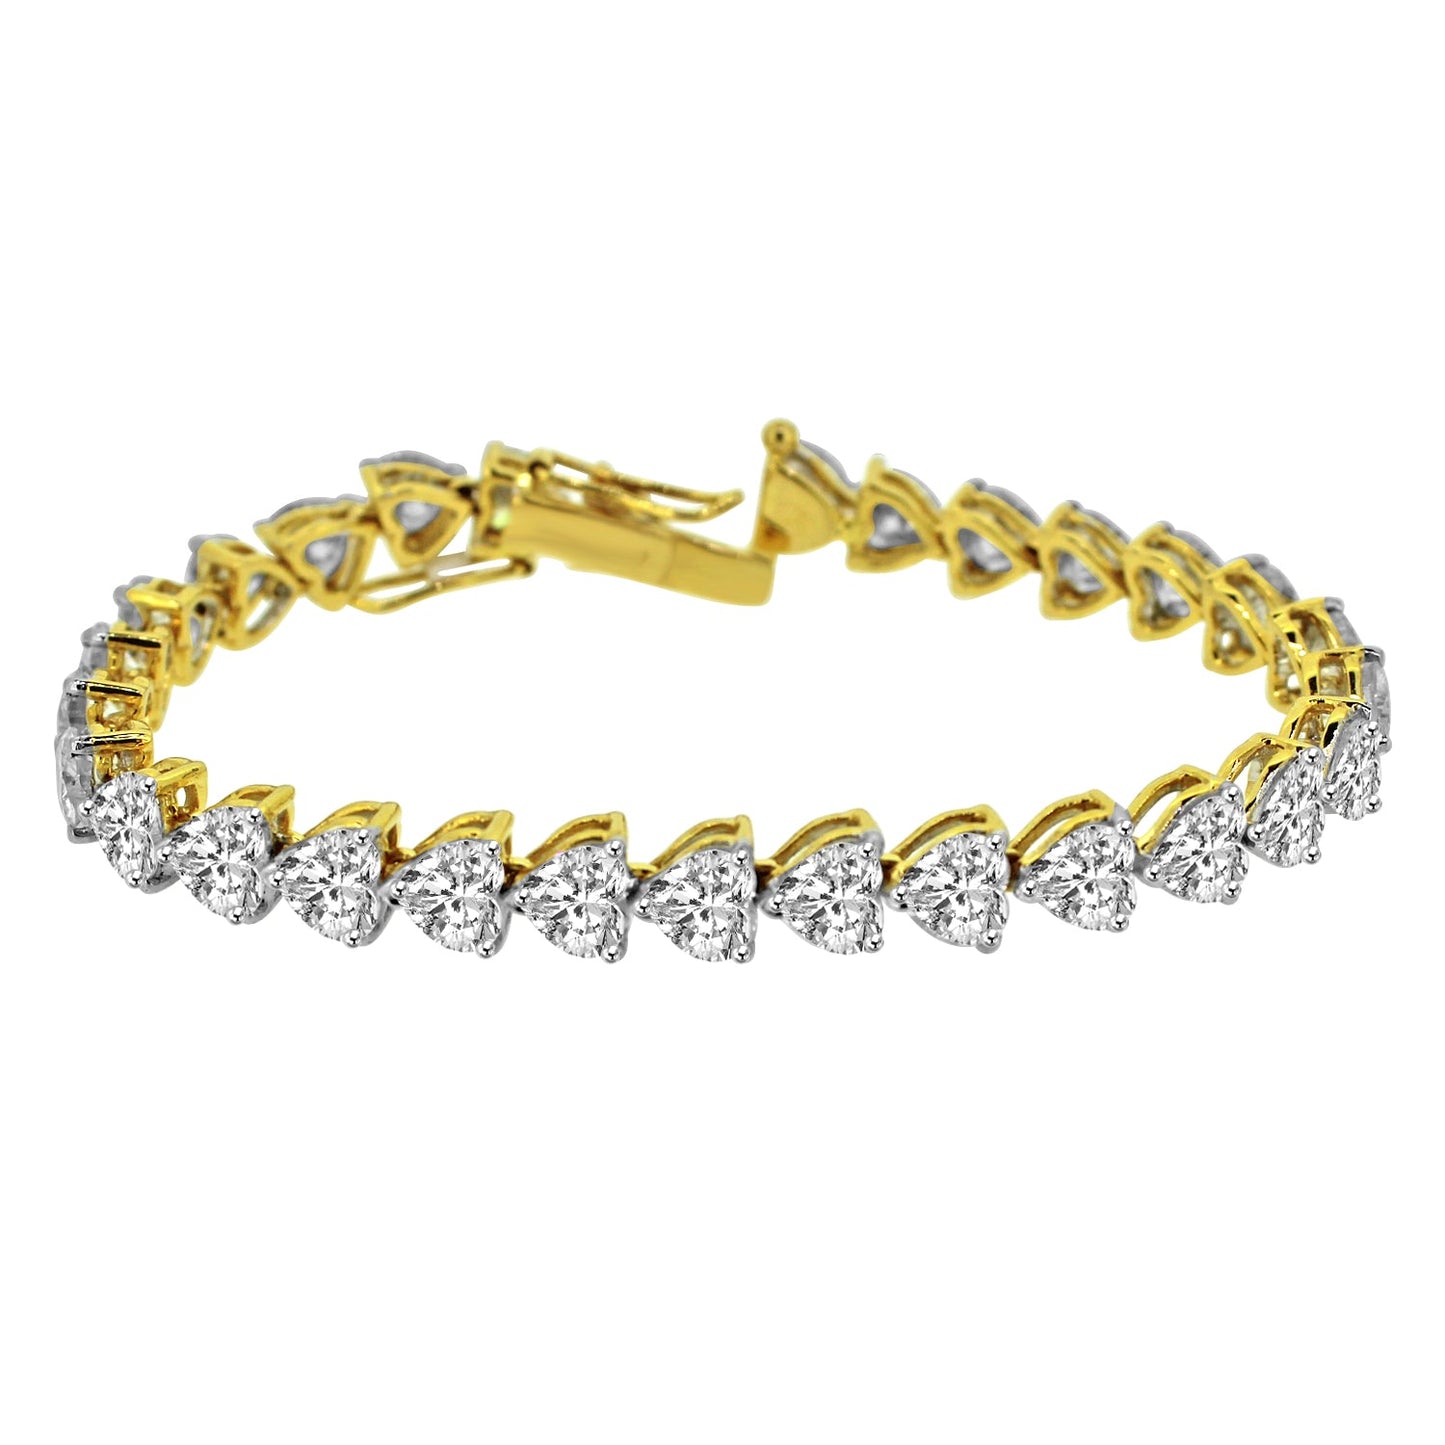 CDL FINESHINE Round Sleek Elegant 14KT Solid Gold Natural Diamond Bracelet  For Women, Weight: 8.25 Gm at Rs 46391/piece in Surat